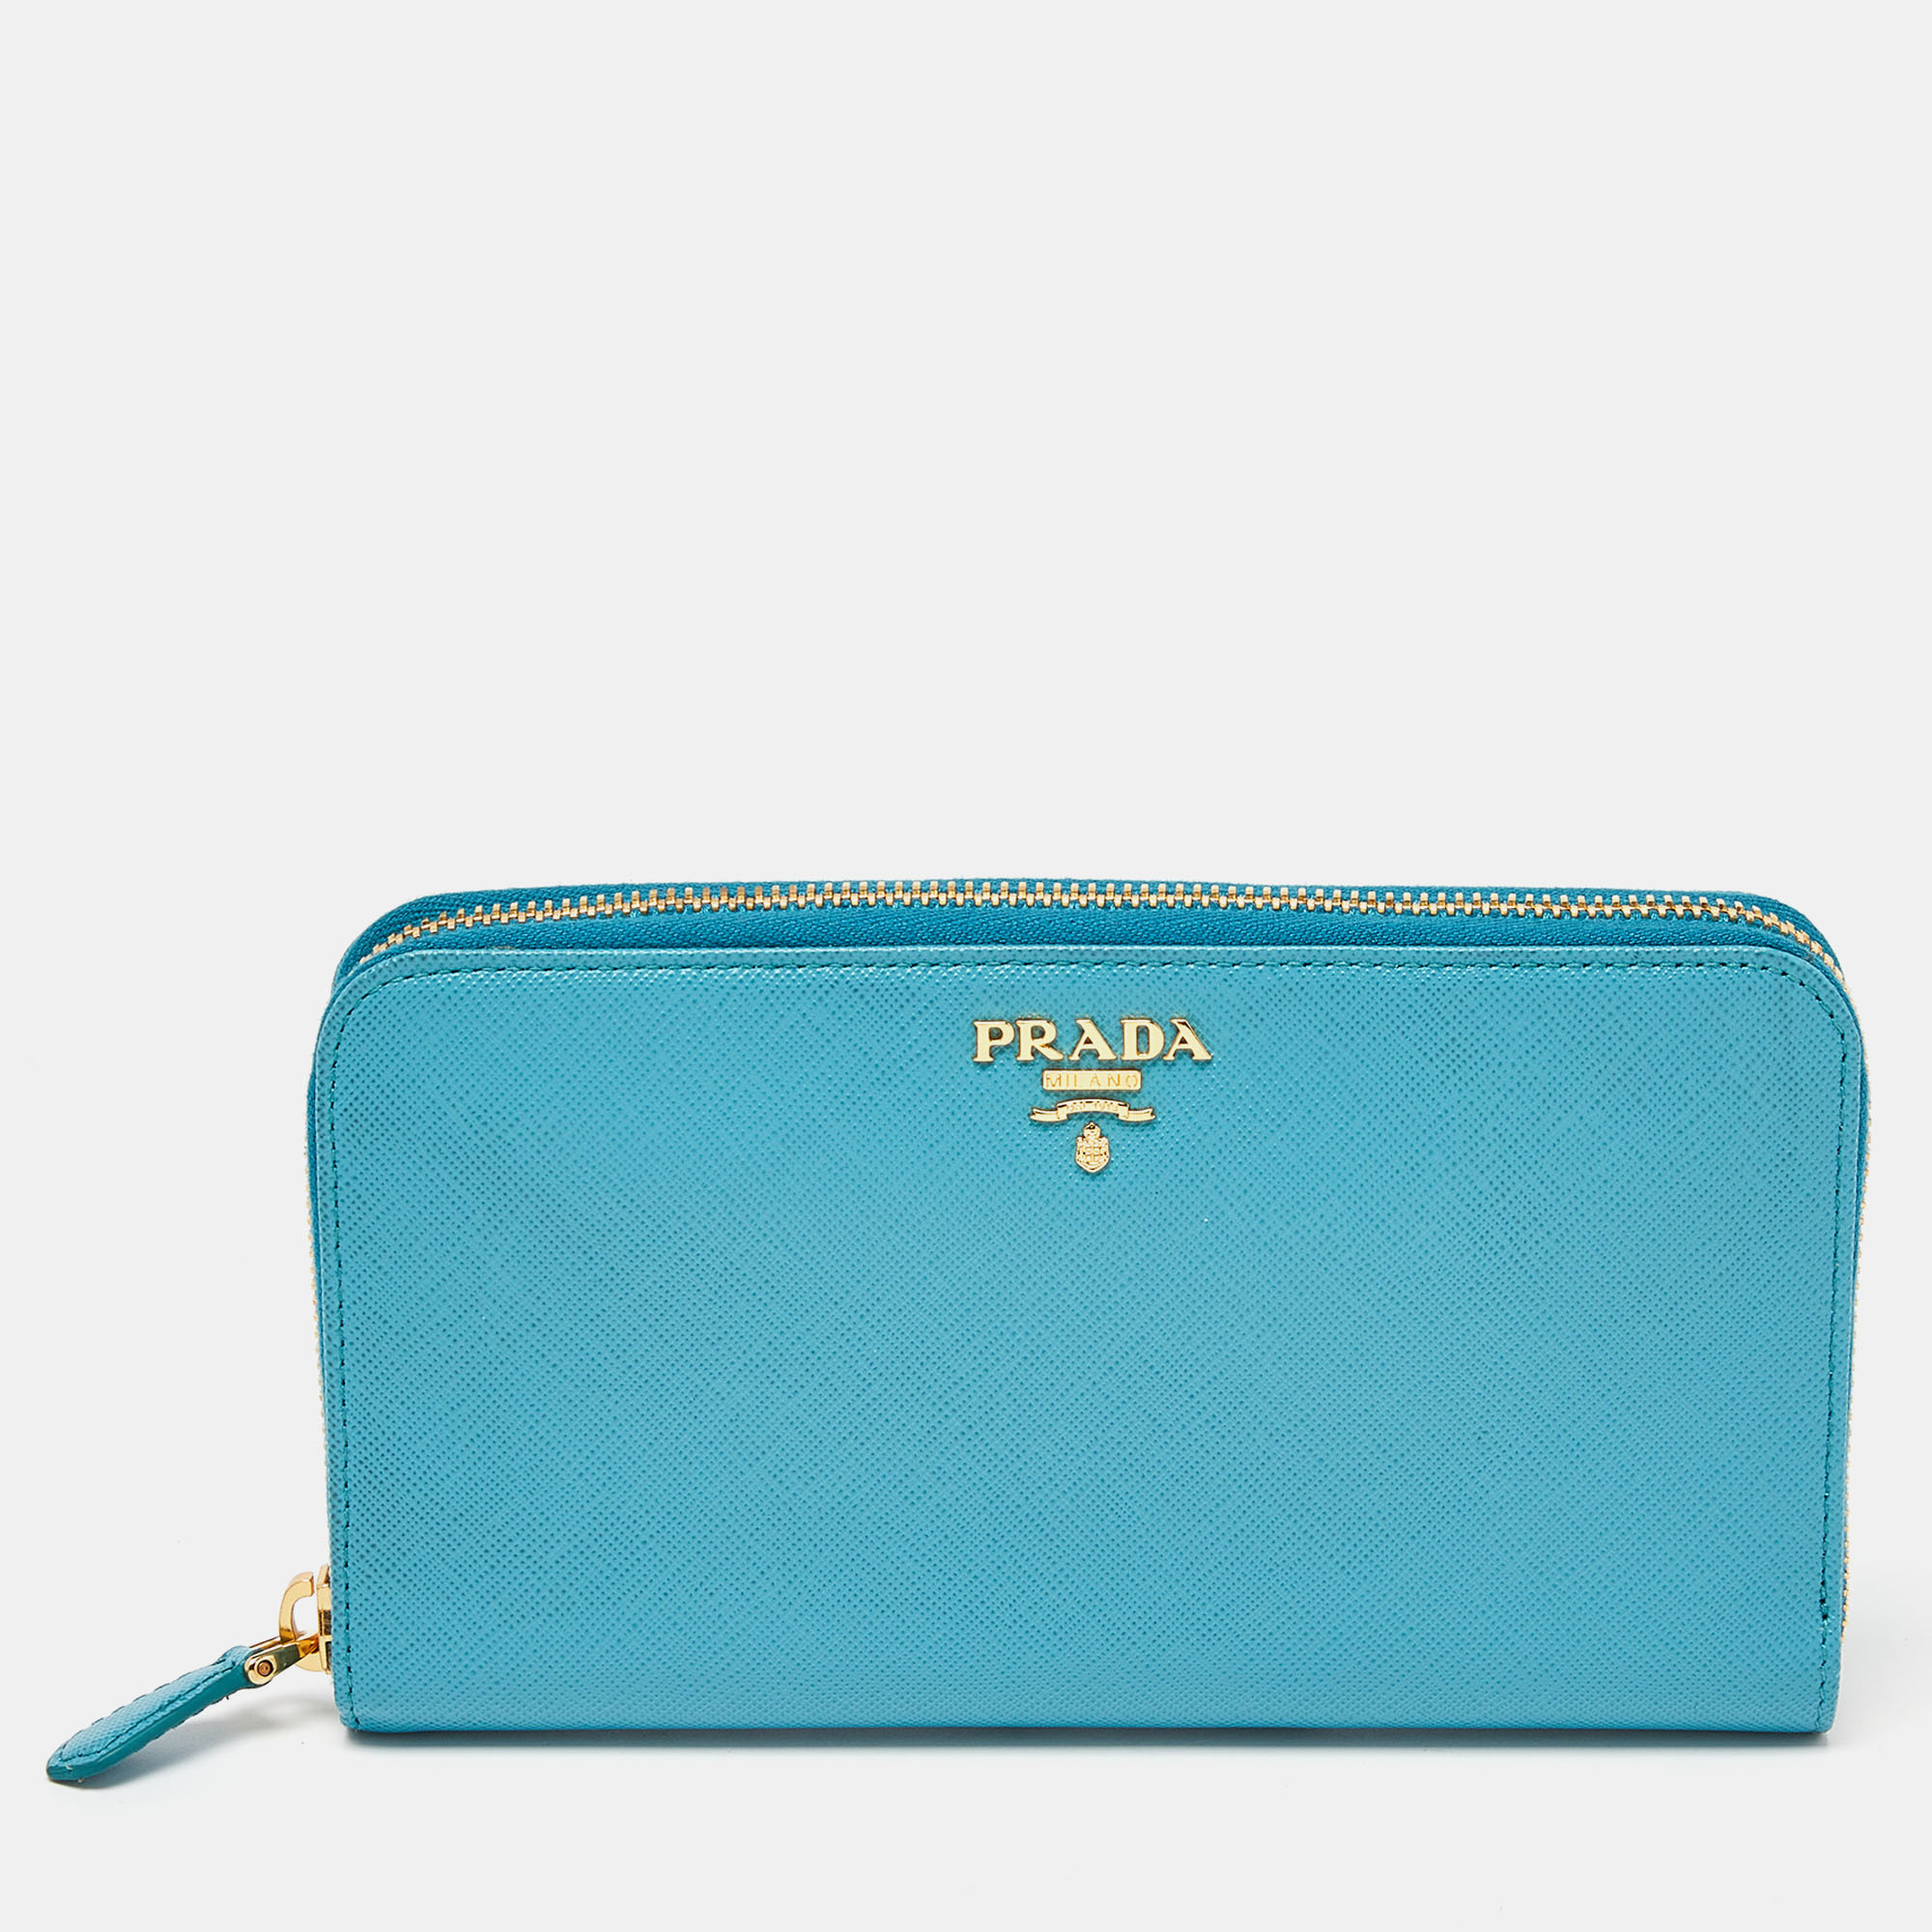 Prada Turquoise Saffiano Leather Zip Around Wallet